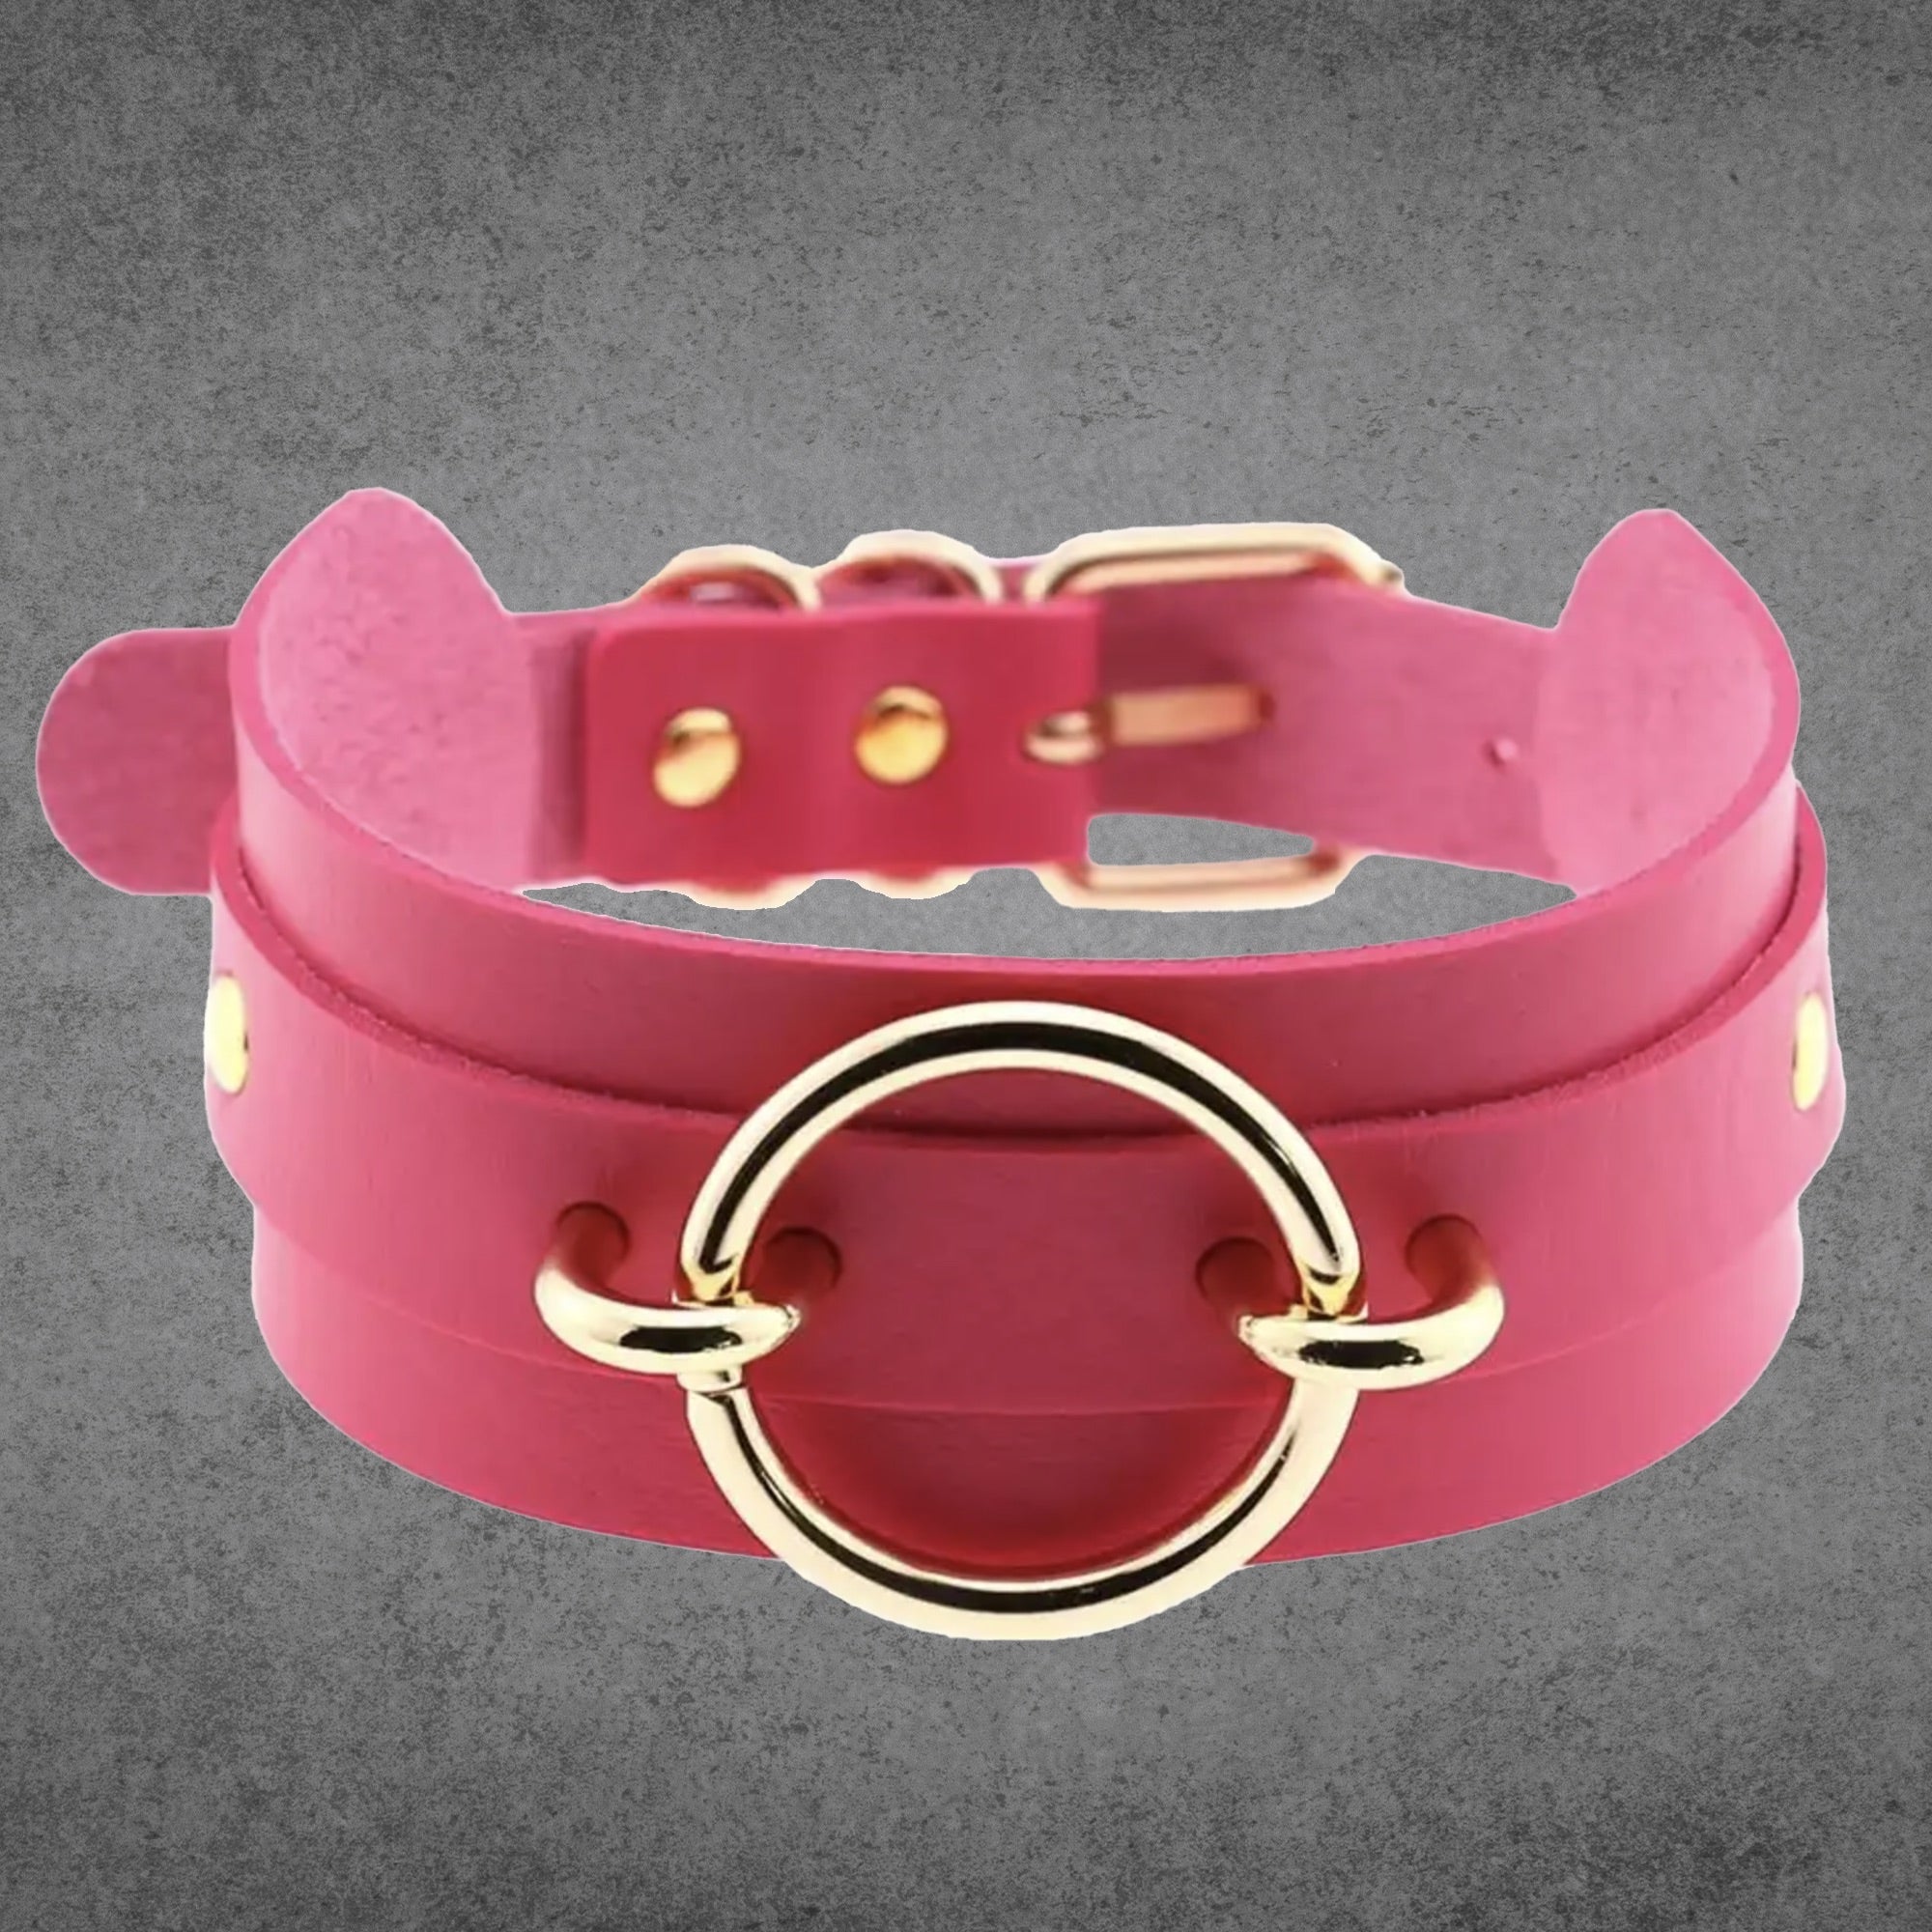 Fixed O Ring Choker Collar - Hot Pink & Gold